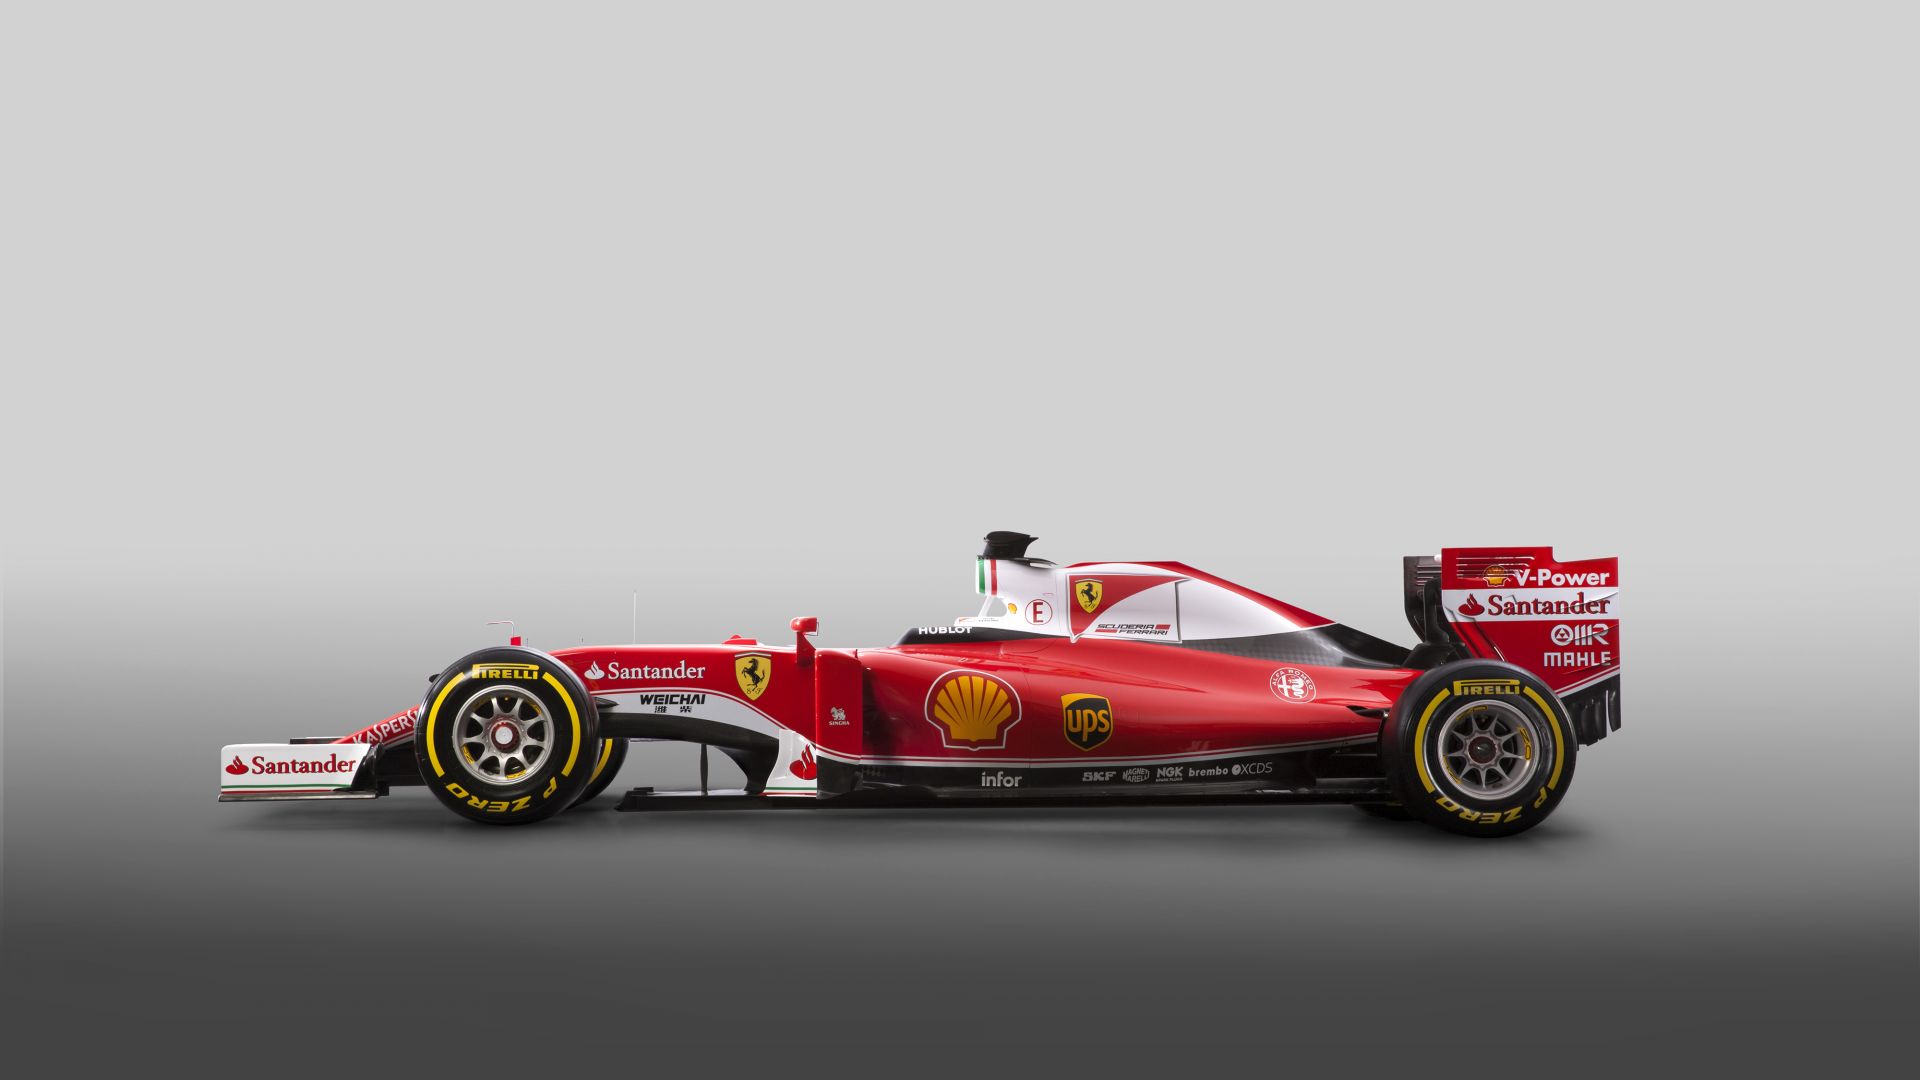 Феррари СФ-16-Ш, Формула 1, Ф1, красный, Ferrari SF16-H, Formula 1, F1, red (horizontal)